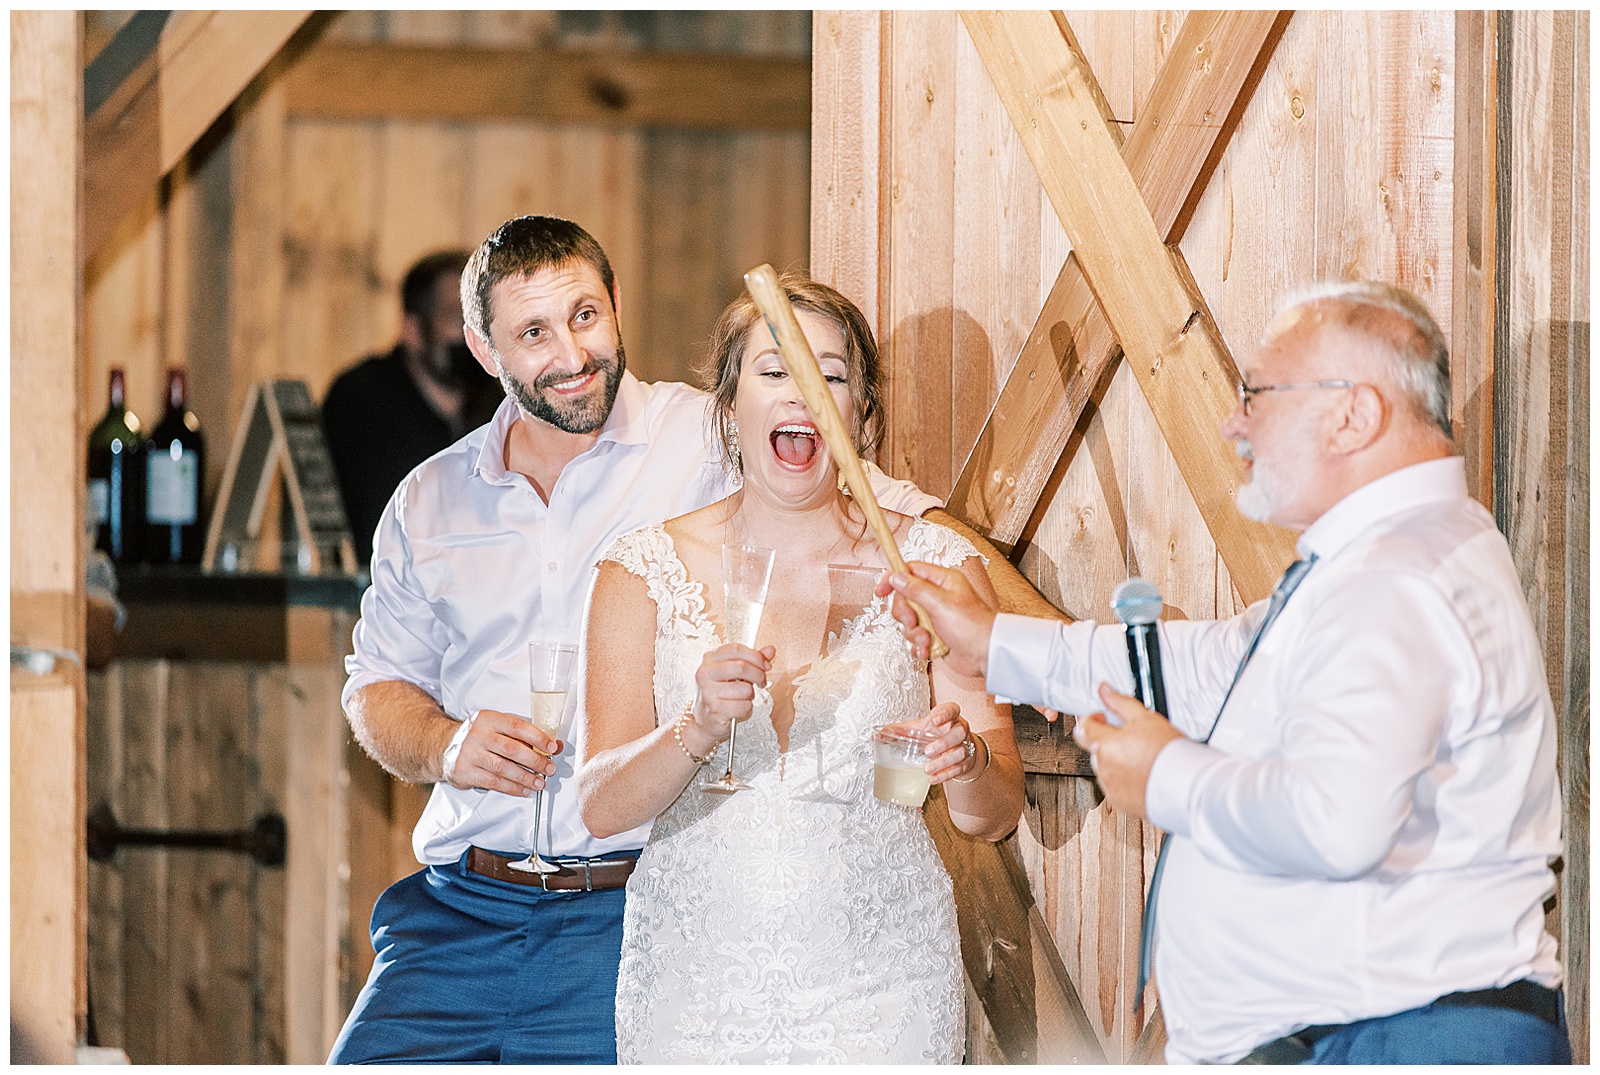 bride and groom at indoor summer wedding reception in wooden barn